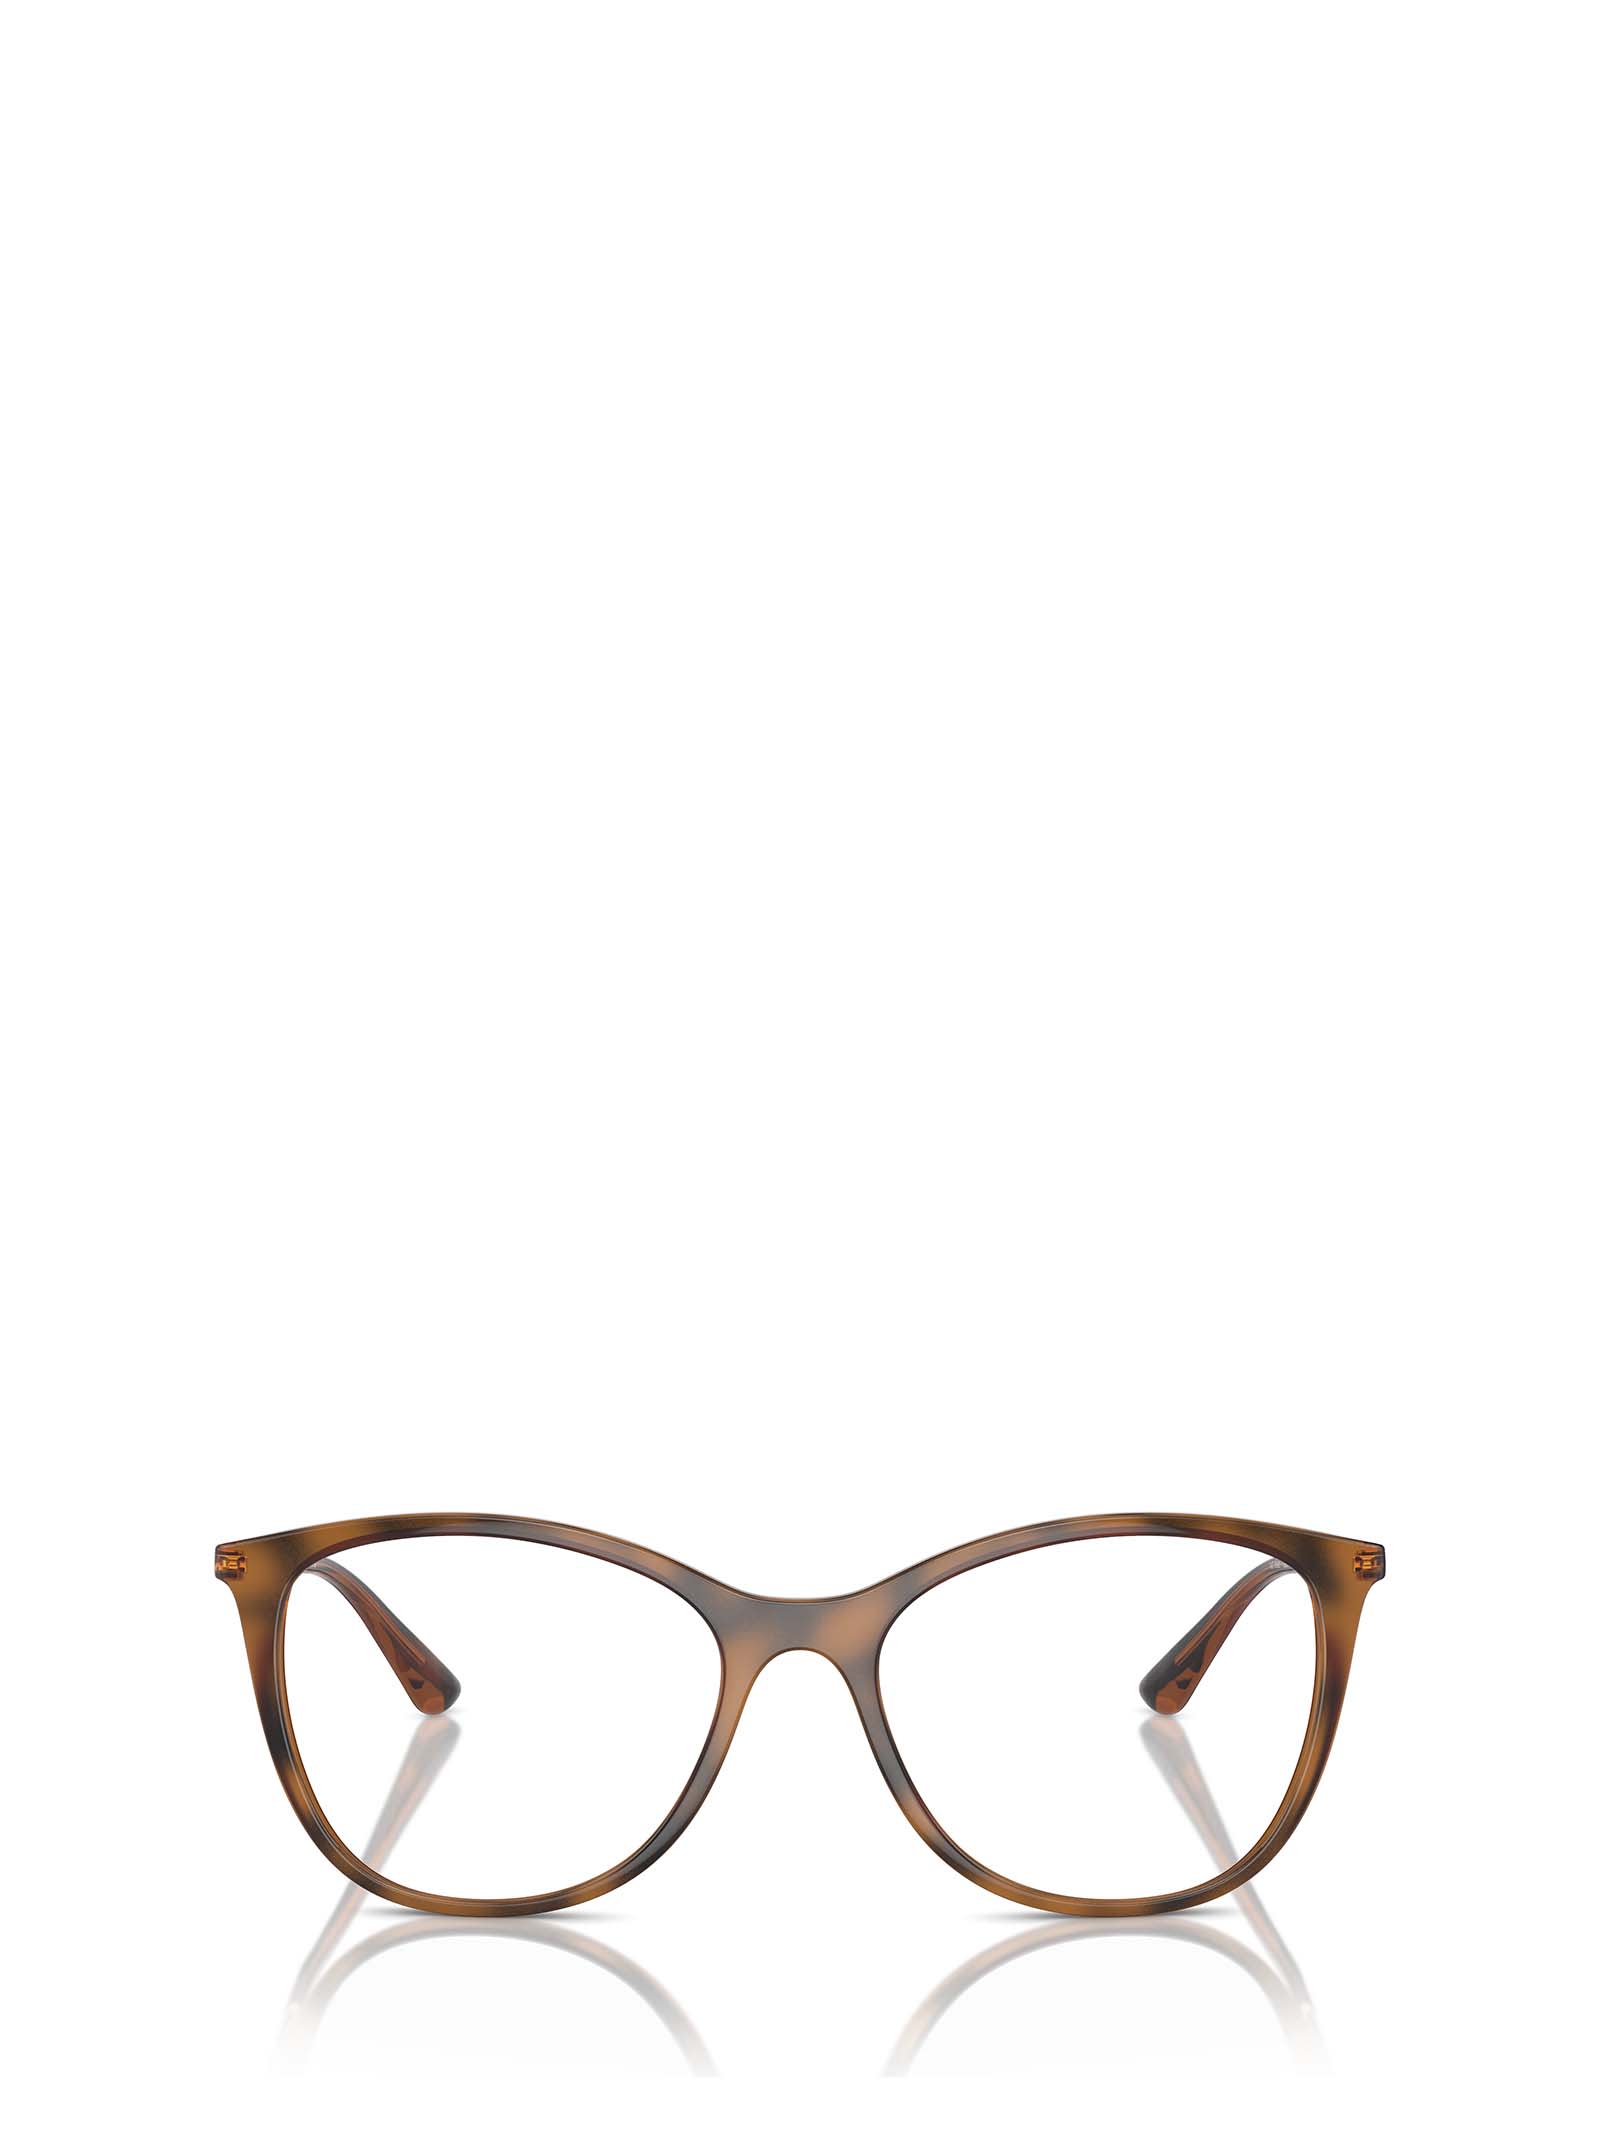 Vogue Eyewear Vo5562 Top Dark Havana / Light Brown Glasses